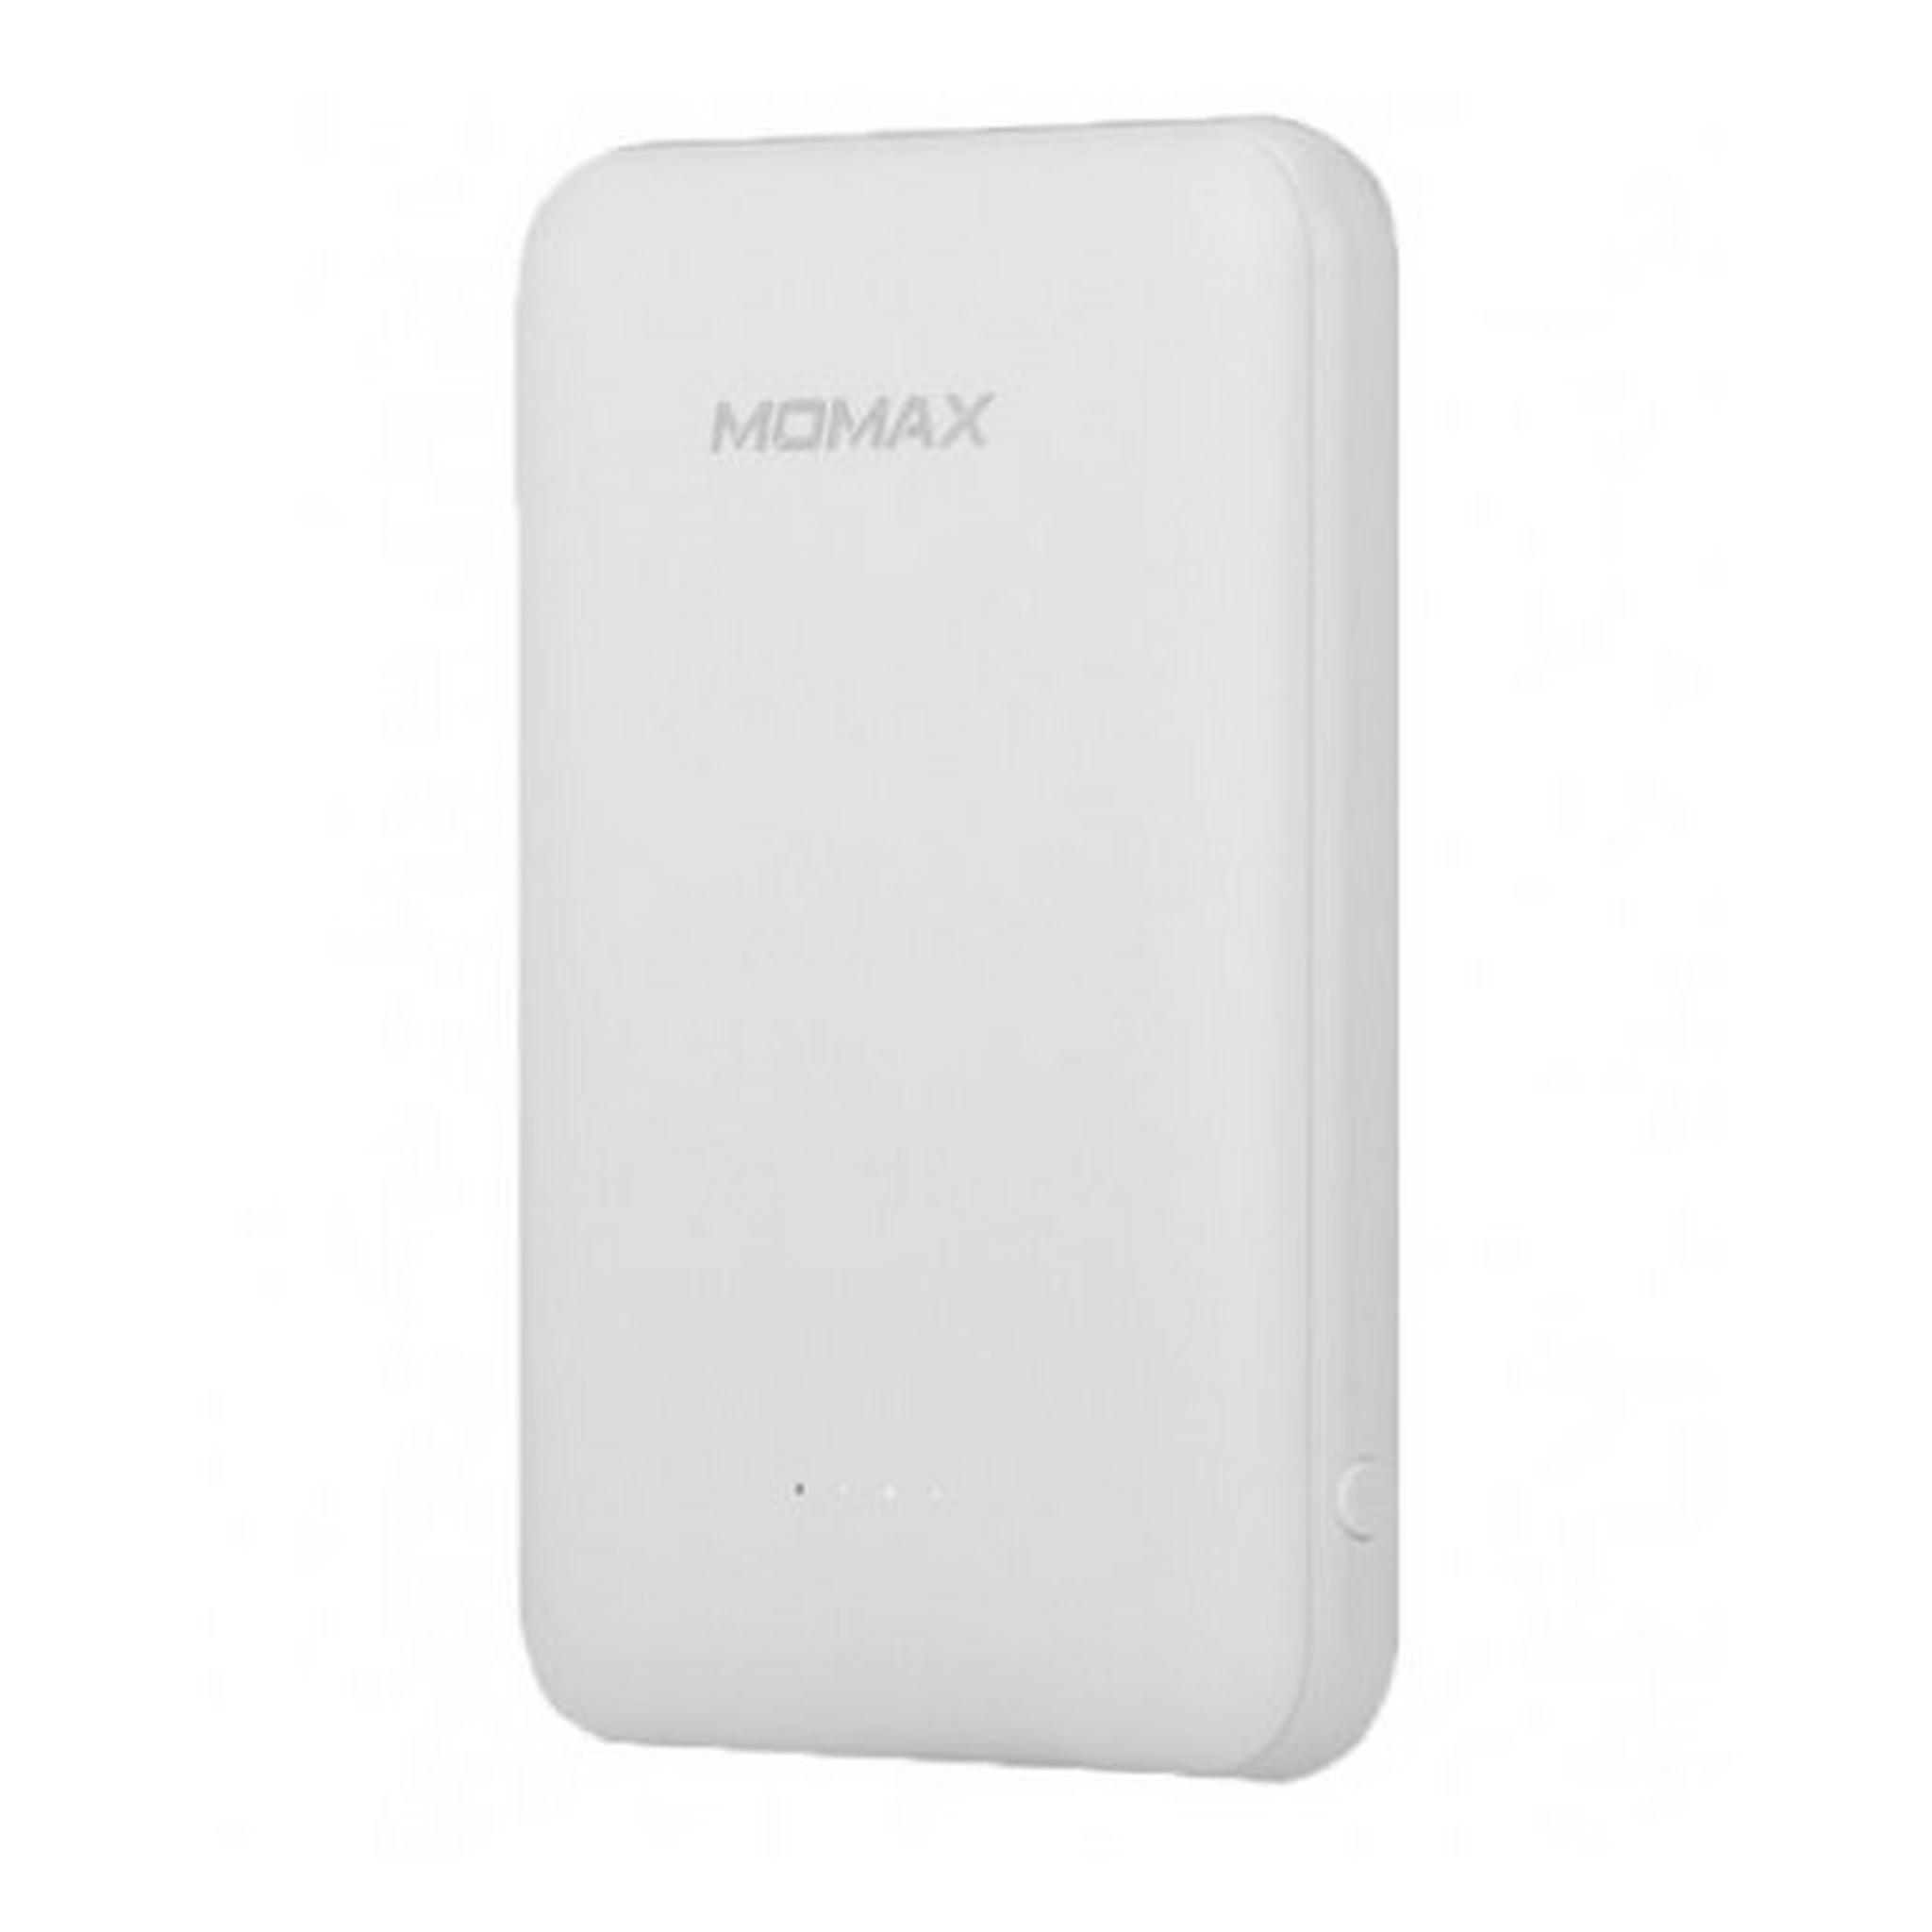 Momax iPower Card 2 External Battery 5000mAh - White